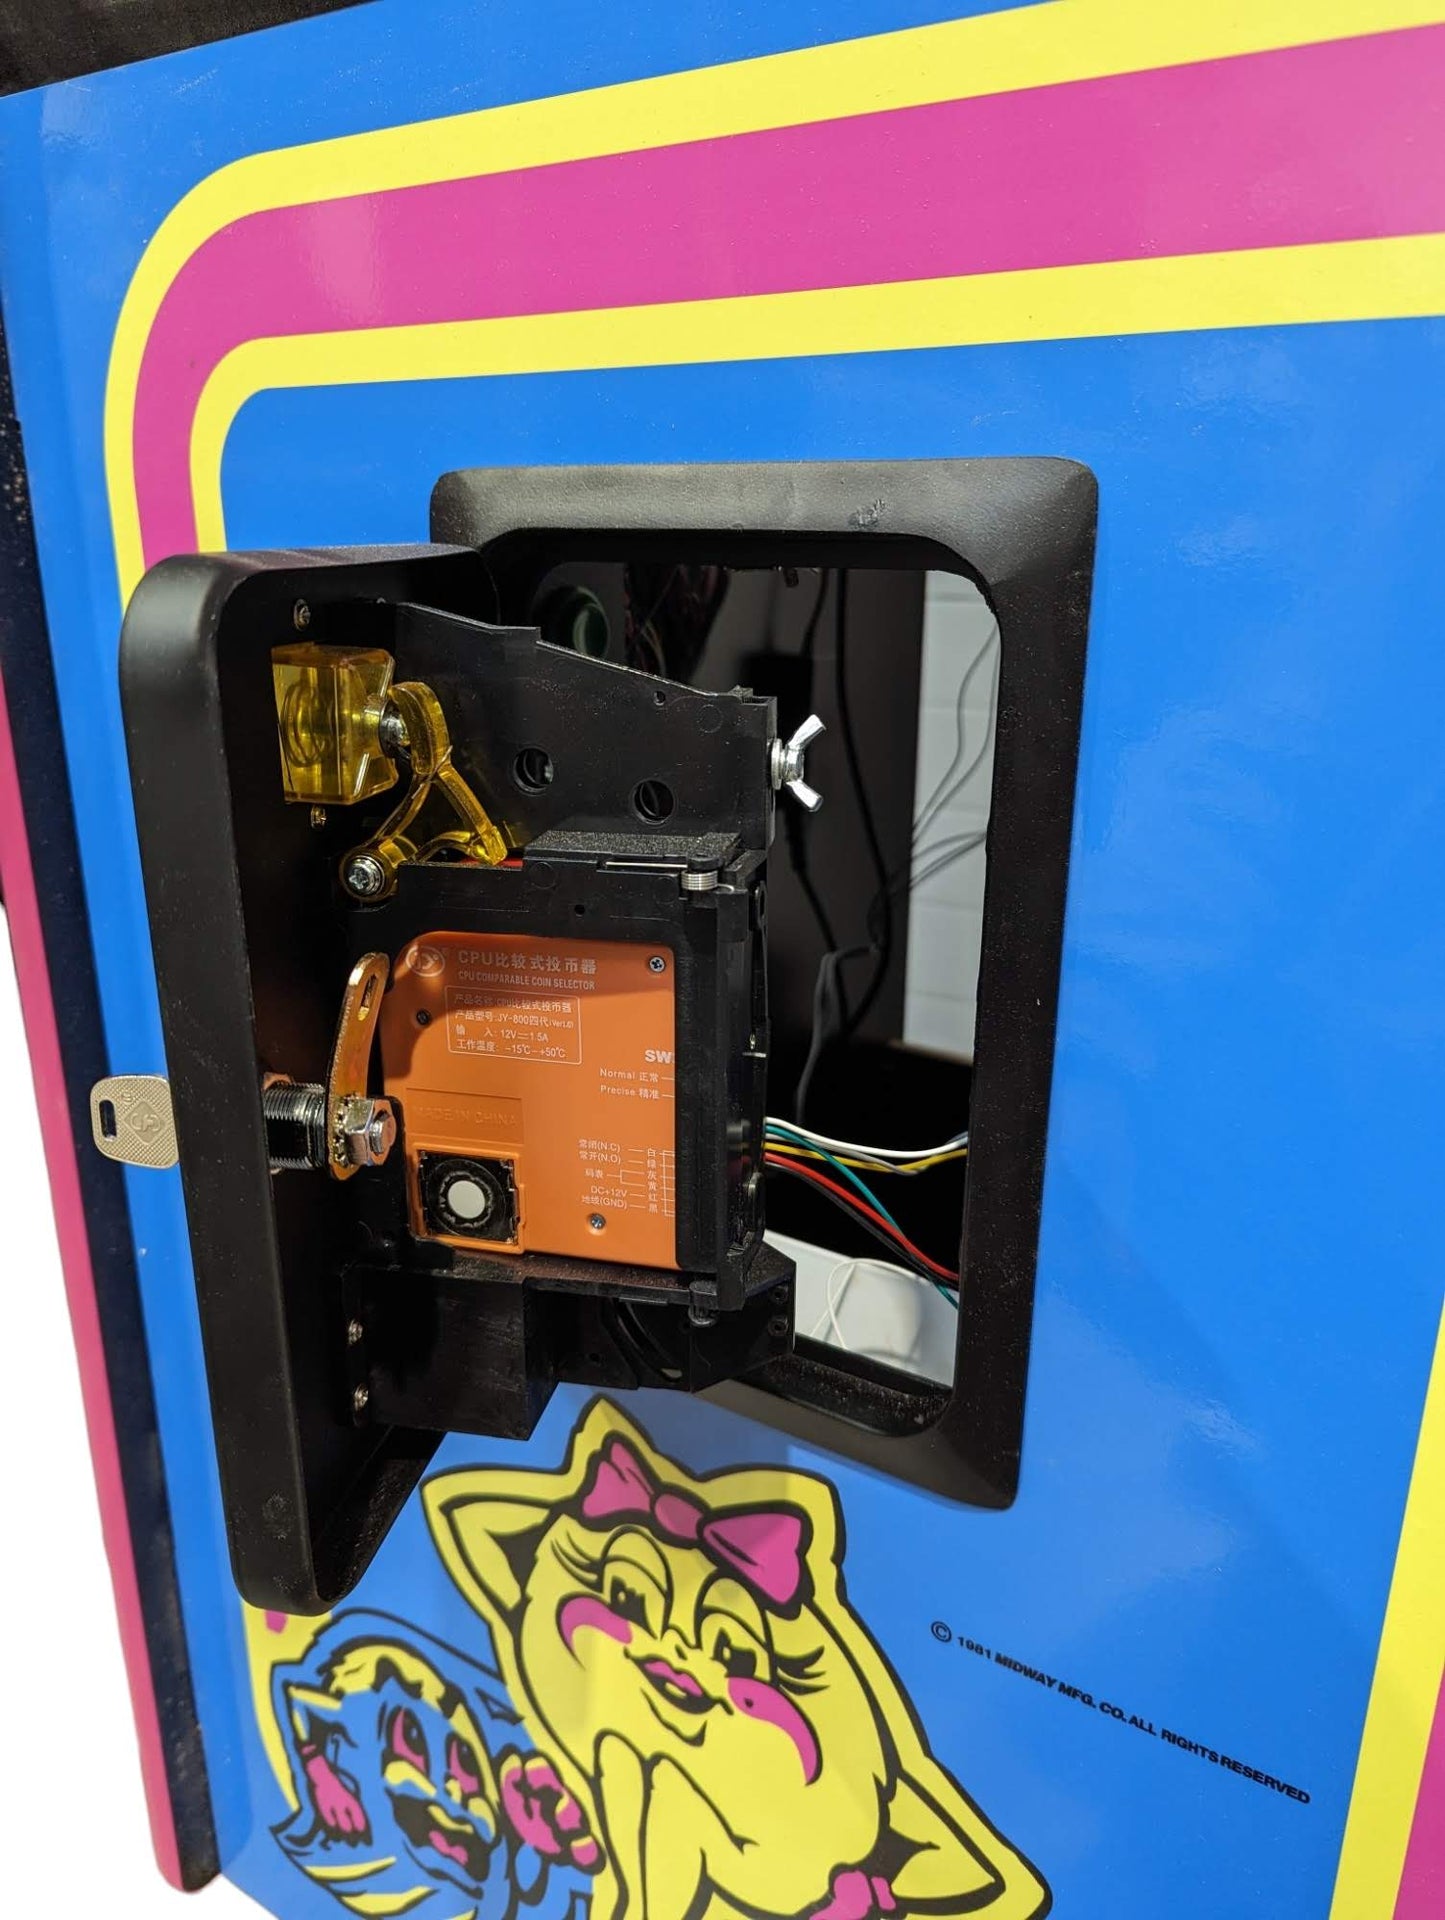 Ms Pacman Arcade Machine - Accurate Replica